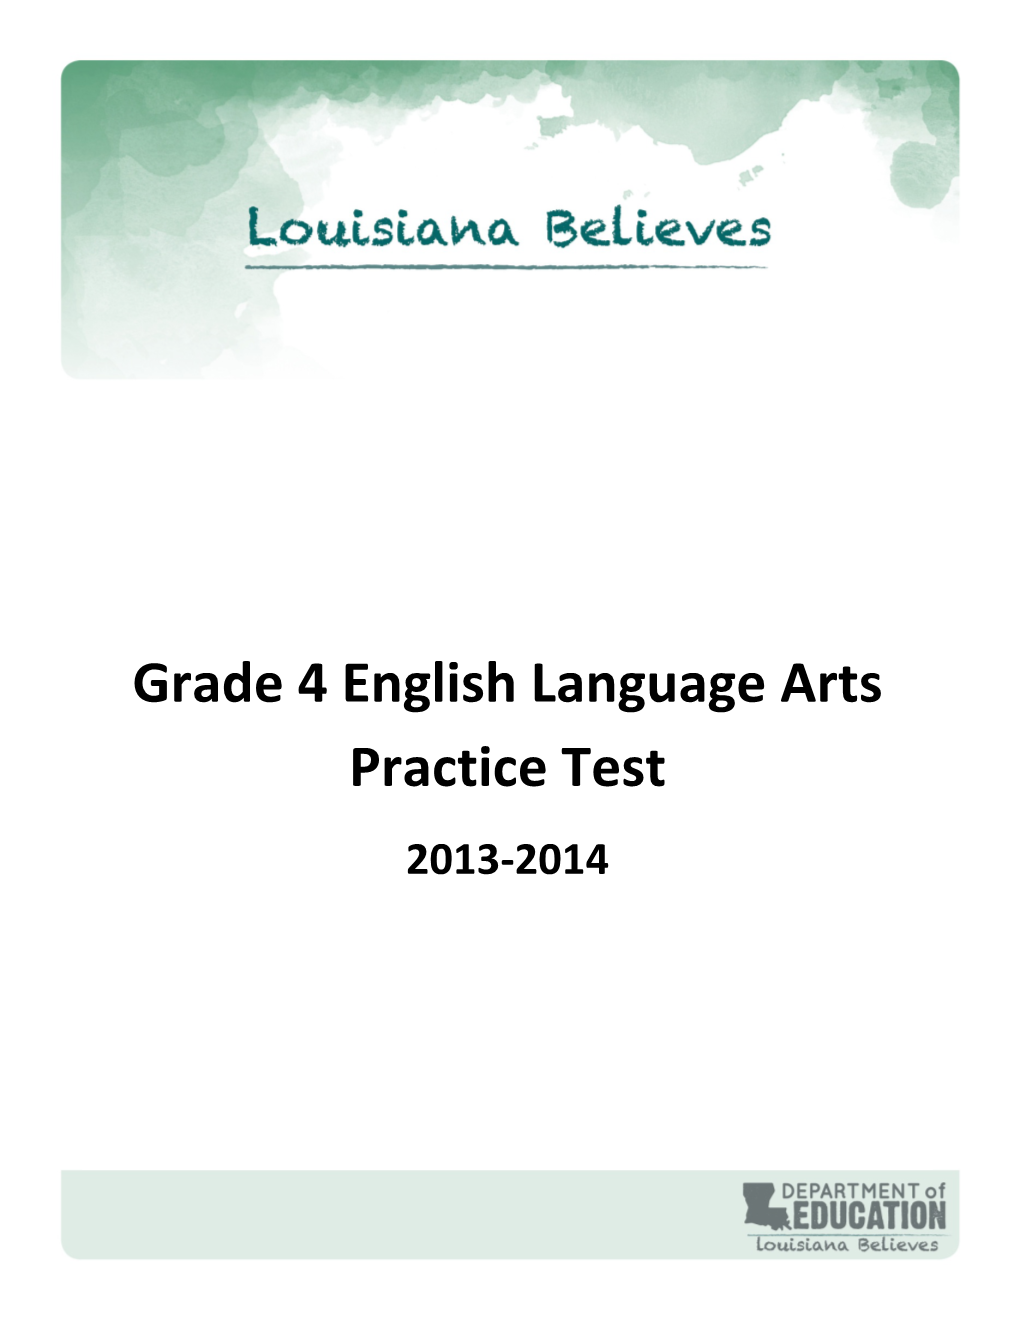 Grade 4 English Language Arts Practice Test 2013-2014